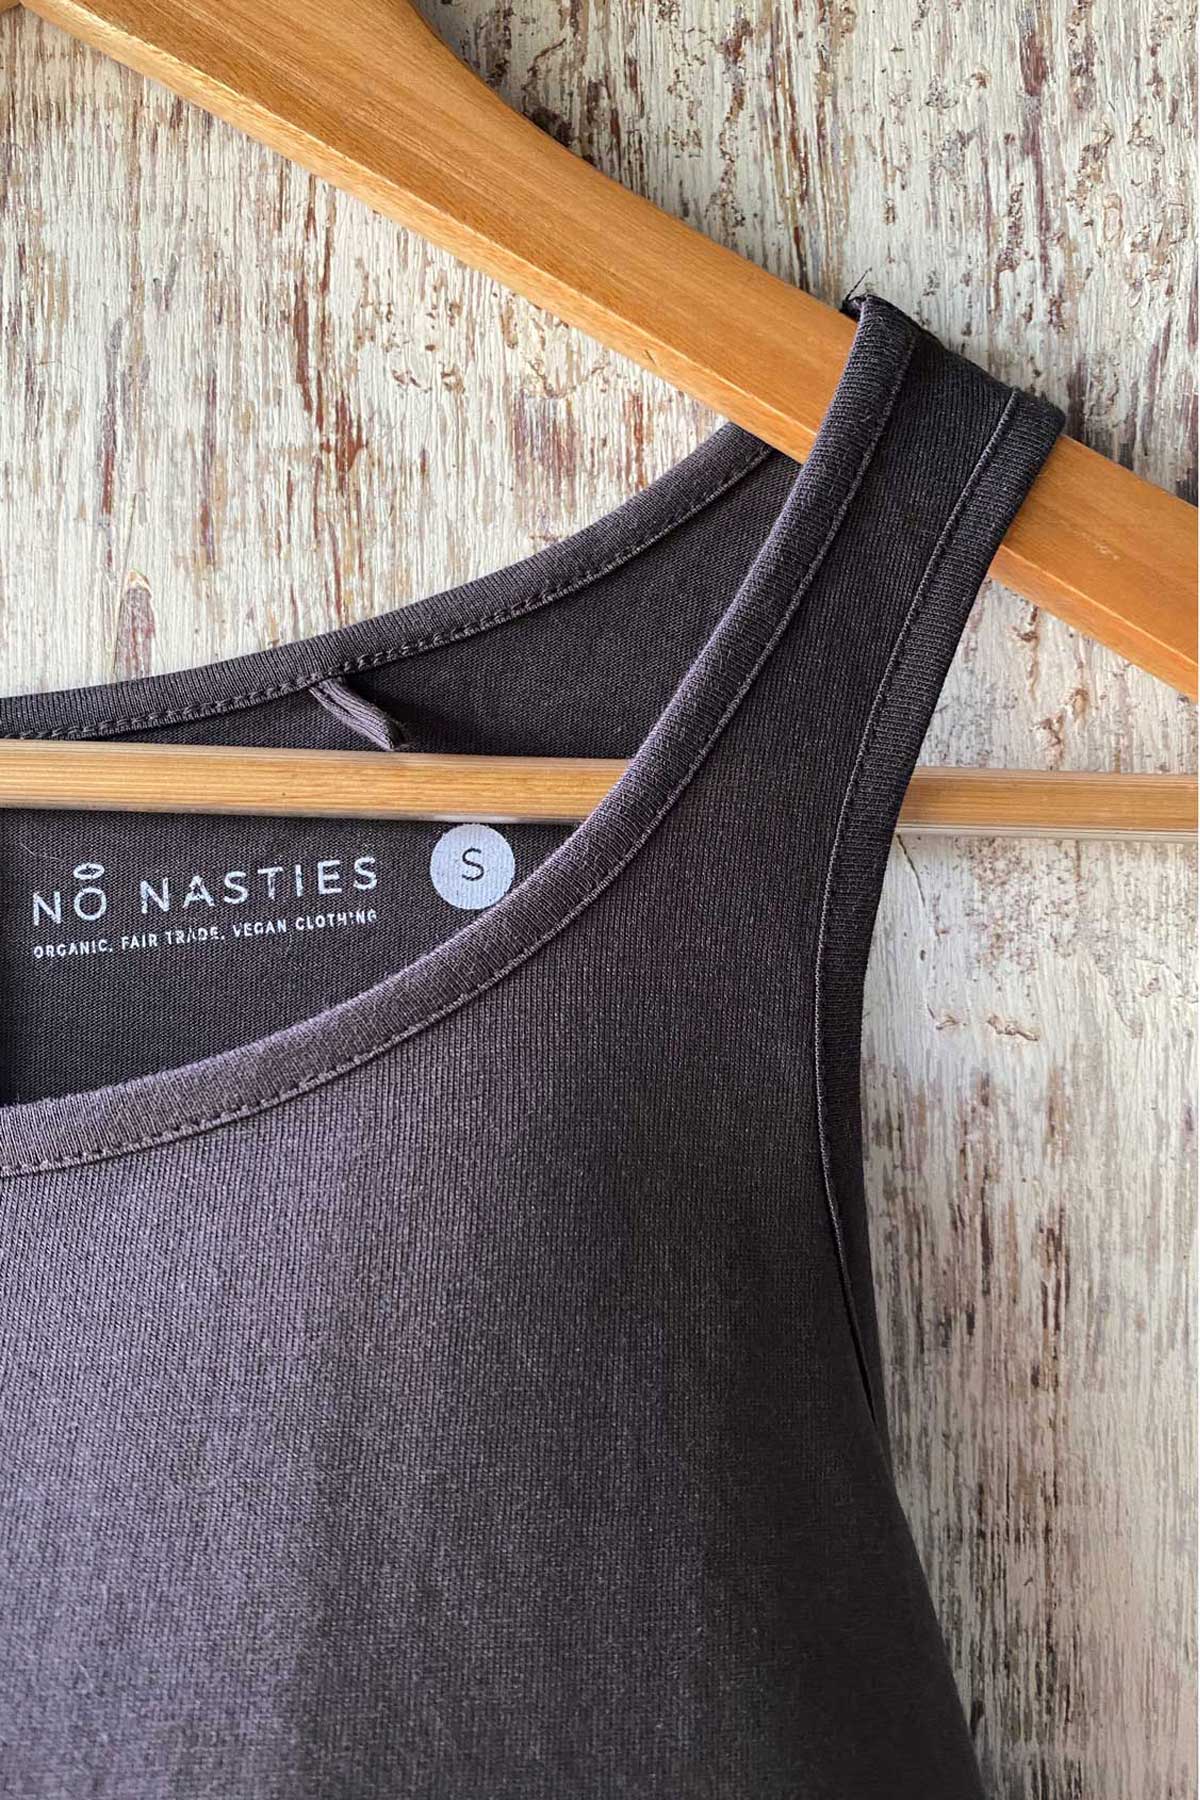 Metz Flared Tank-No Nasties - Organic Cotton Clothing